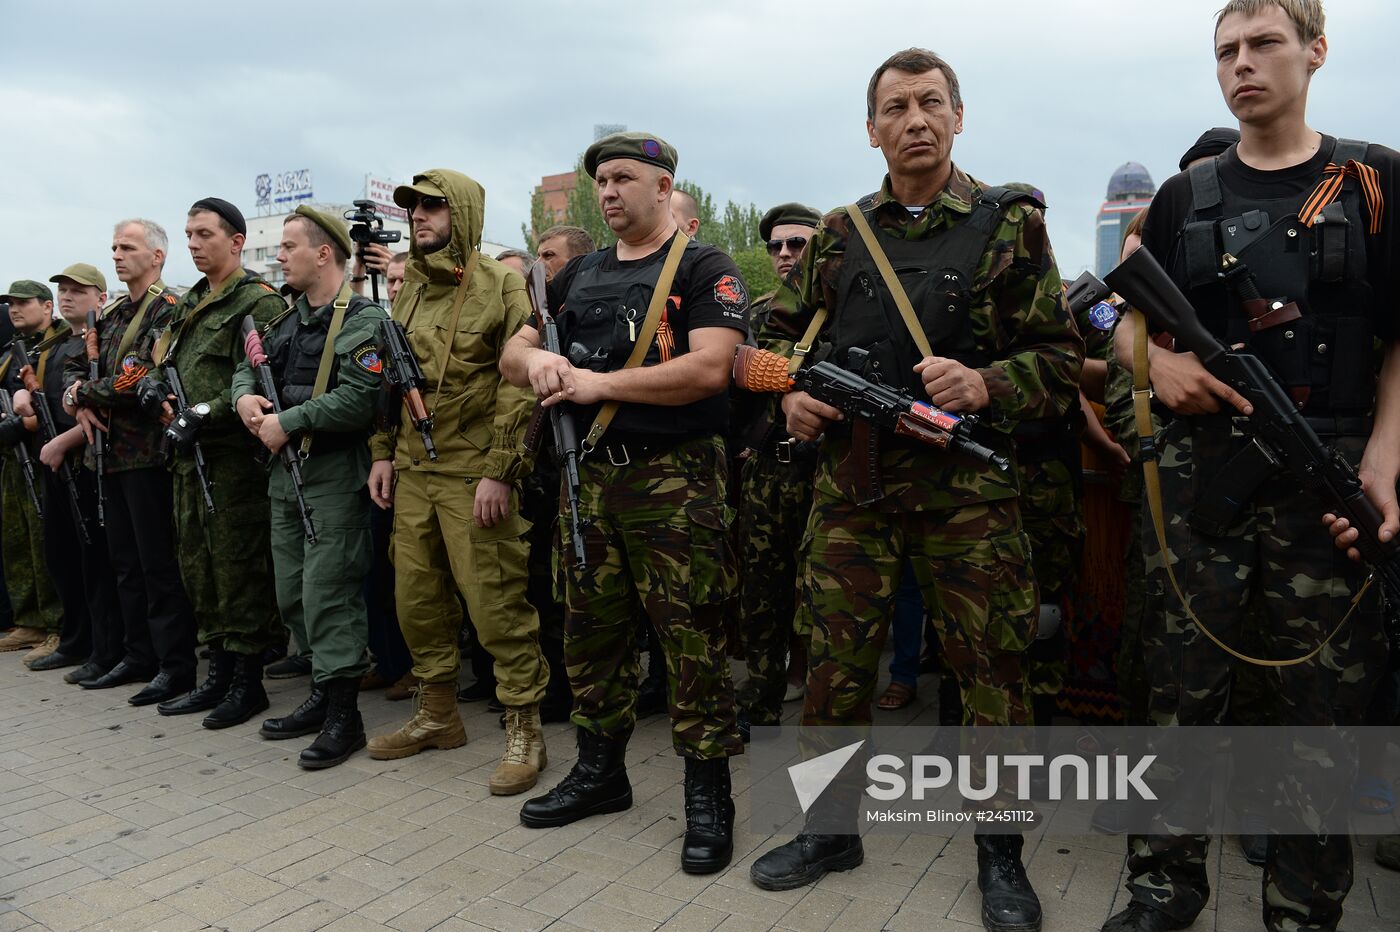 Donbass militia i nDonetsk take oath for service